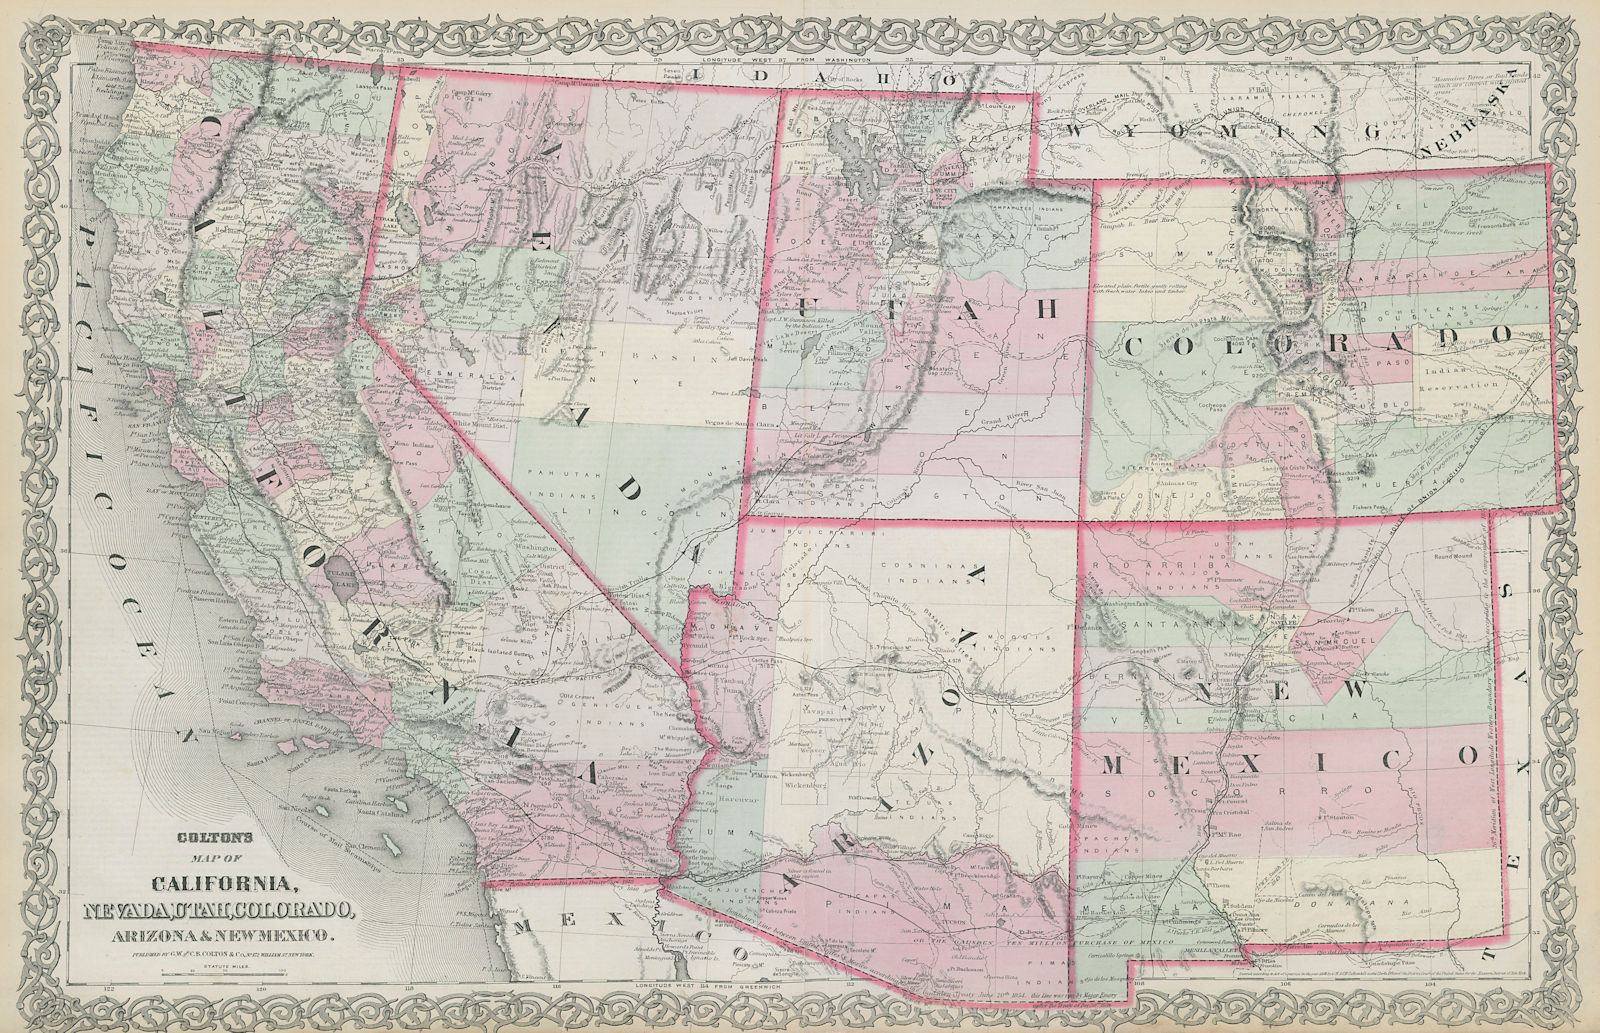 Colton's map of California, Nevada, Utah, Colorado, Arizona & New Mexico 1869